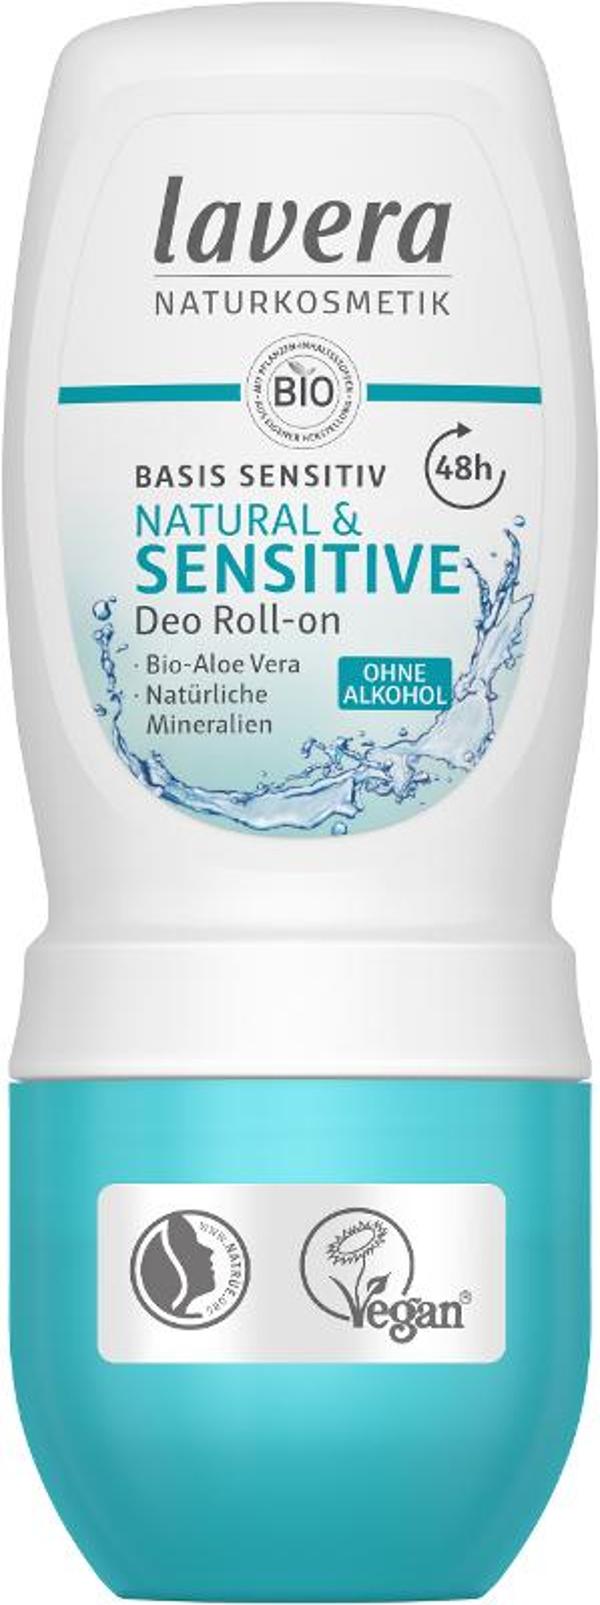 Produktfoto zu Deo Roll on Sensitive Lavera